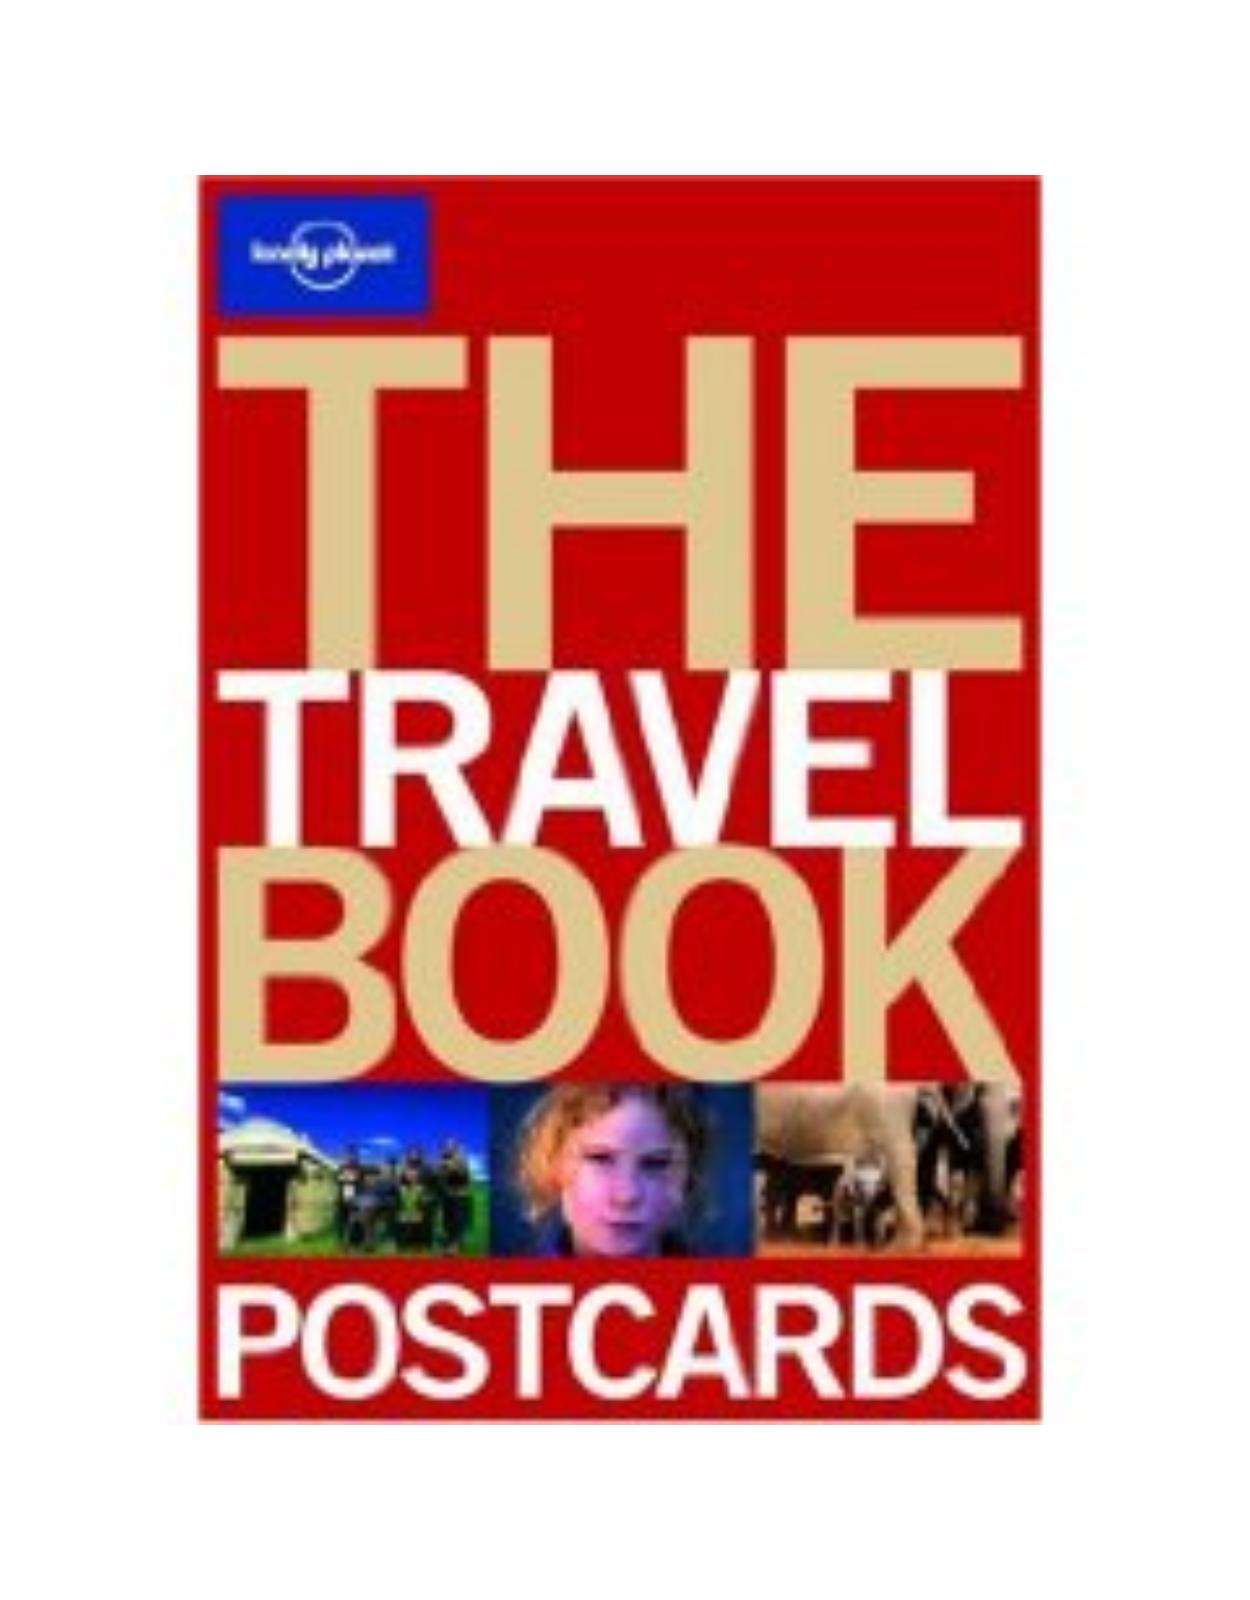 Travel Book Postcards